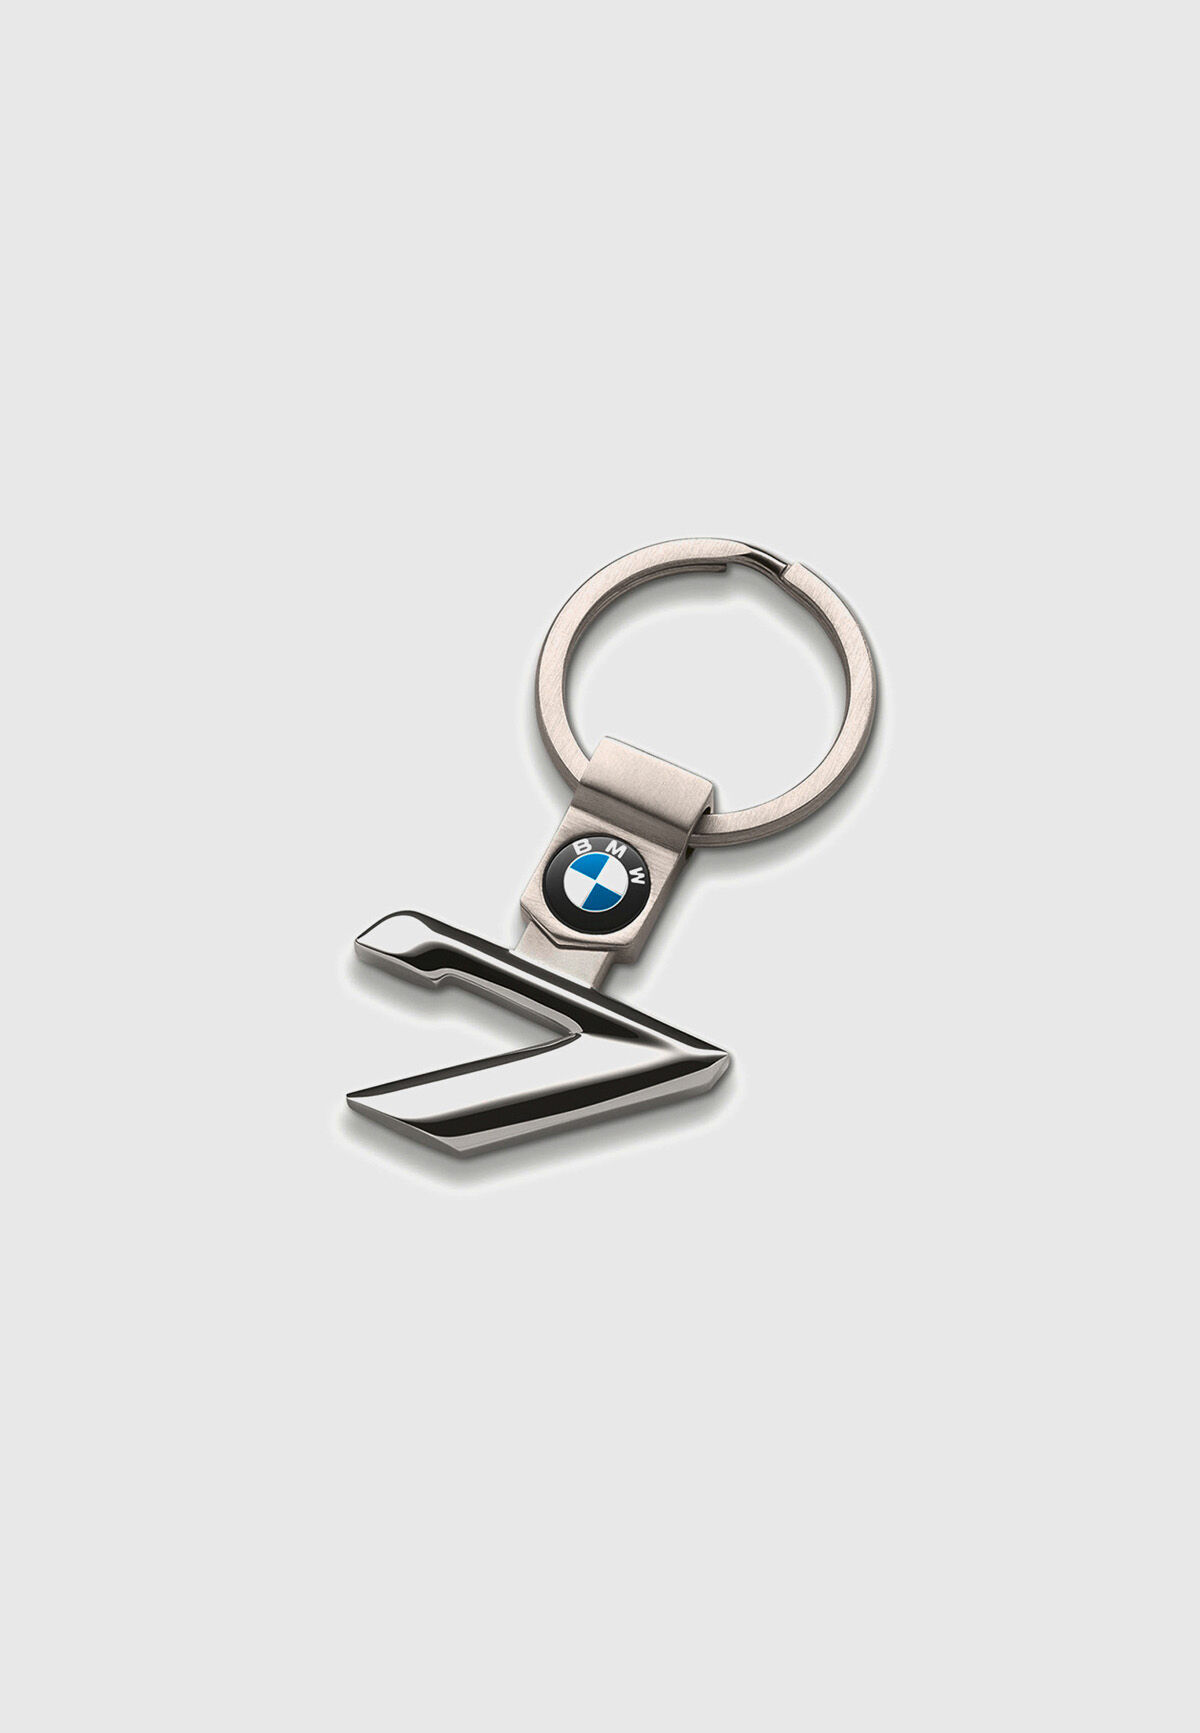 BMW 7er Schlüsselanhänger Schlüssel Anhänger Key 